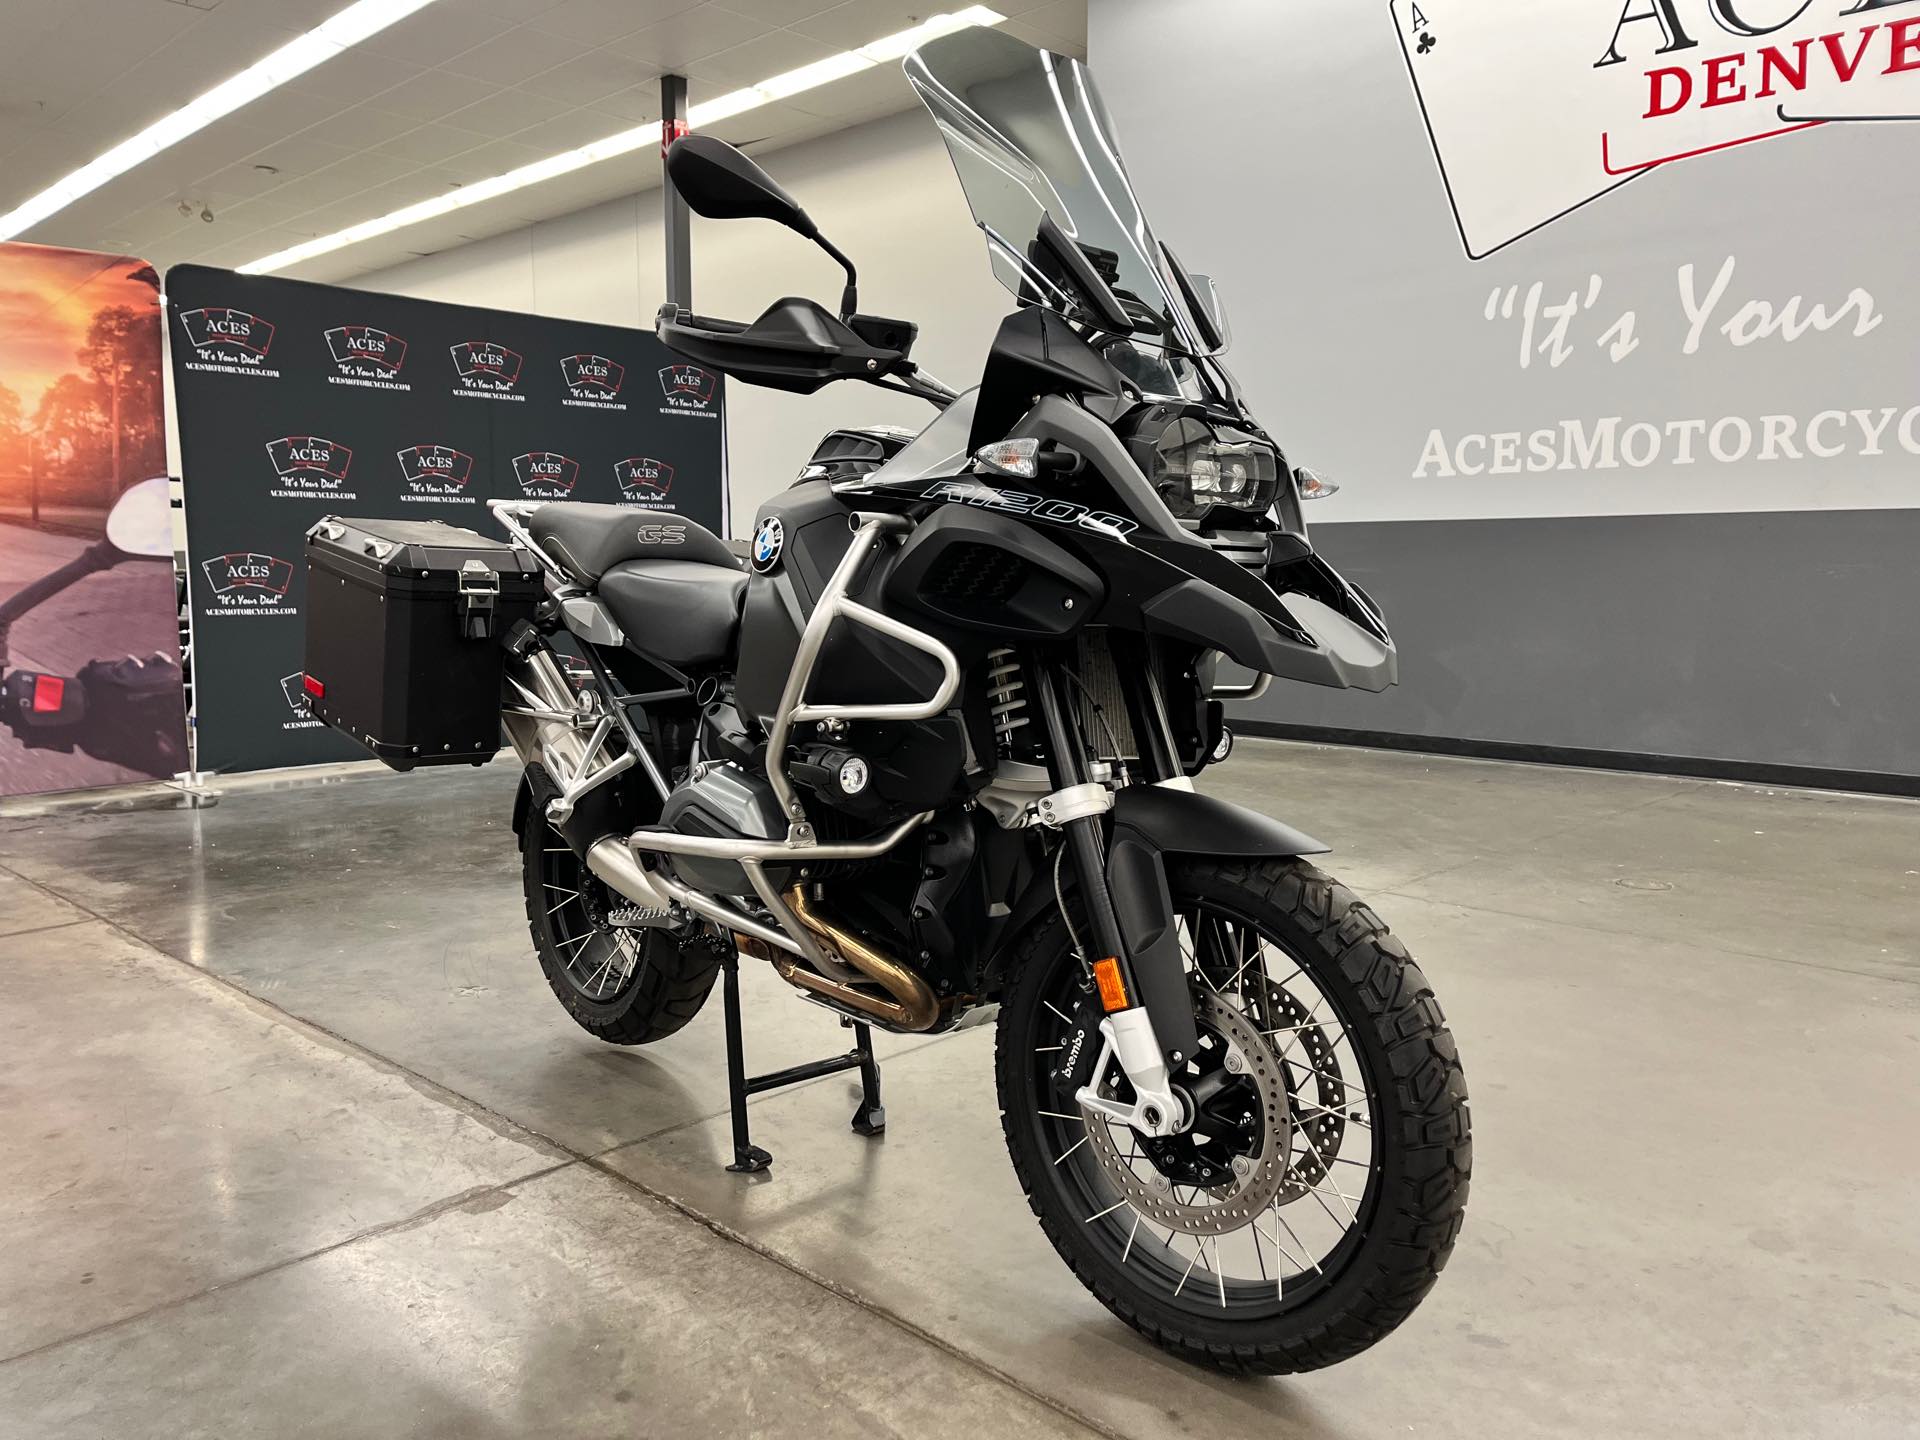 2017 BMW R 1200 GS Adventure at Aces Motorcycles - Denver